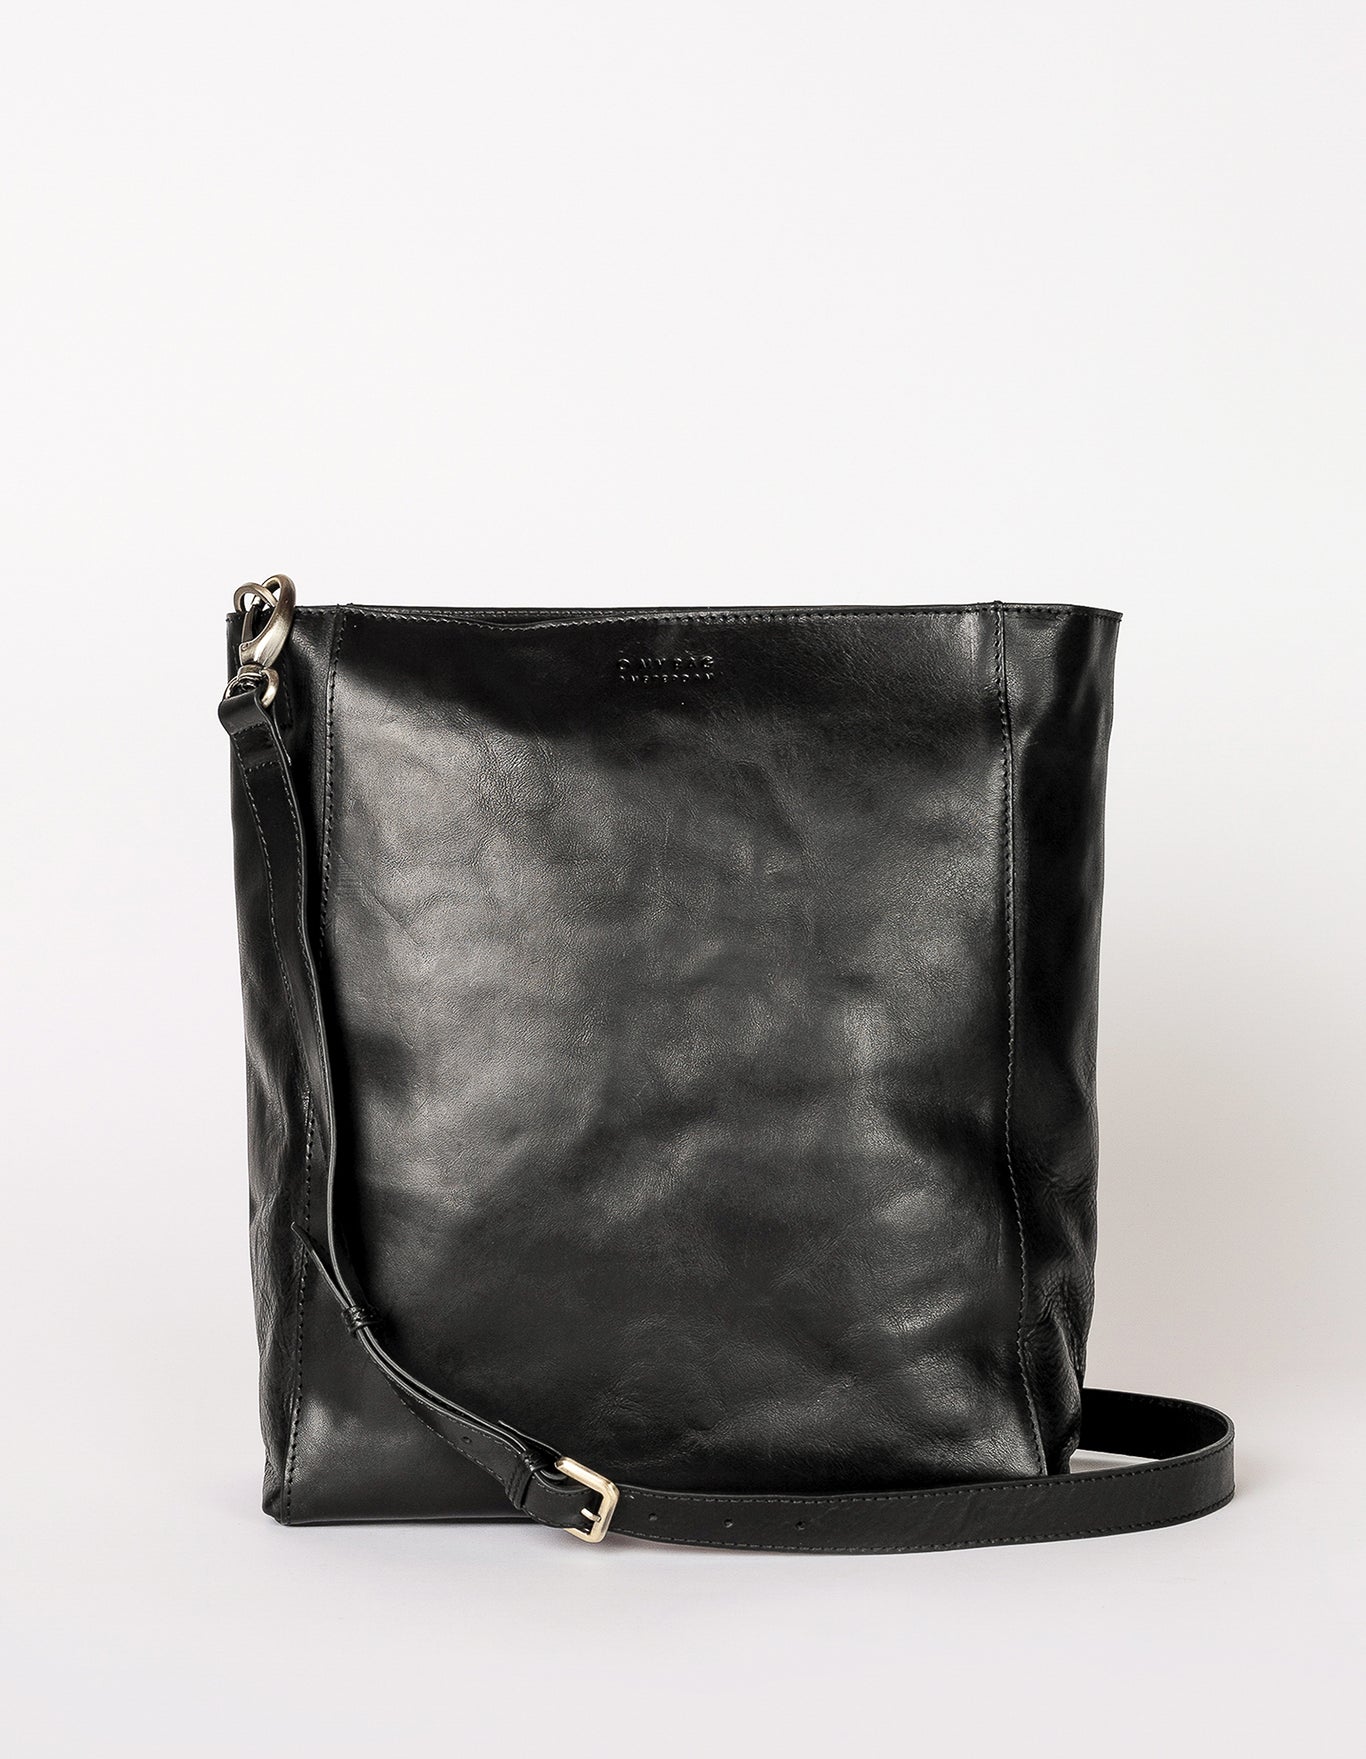 Sofia - Black Stromboli Leather